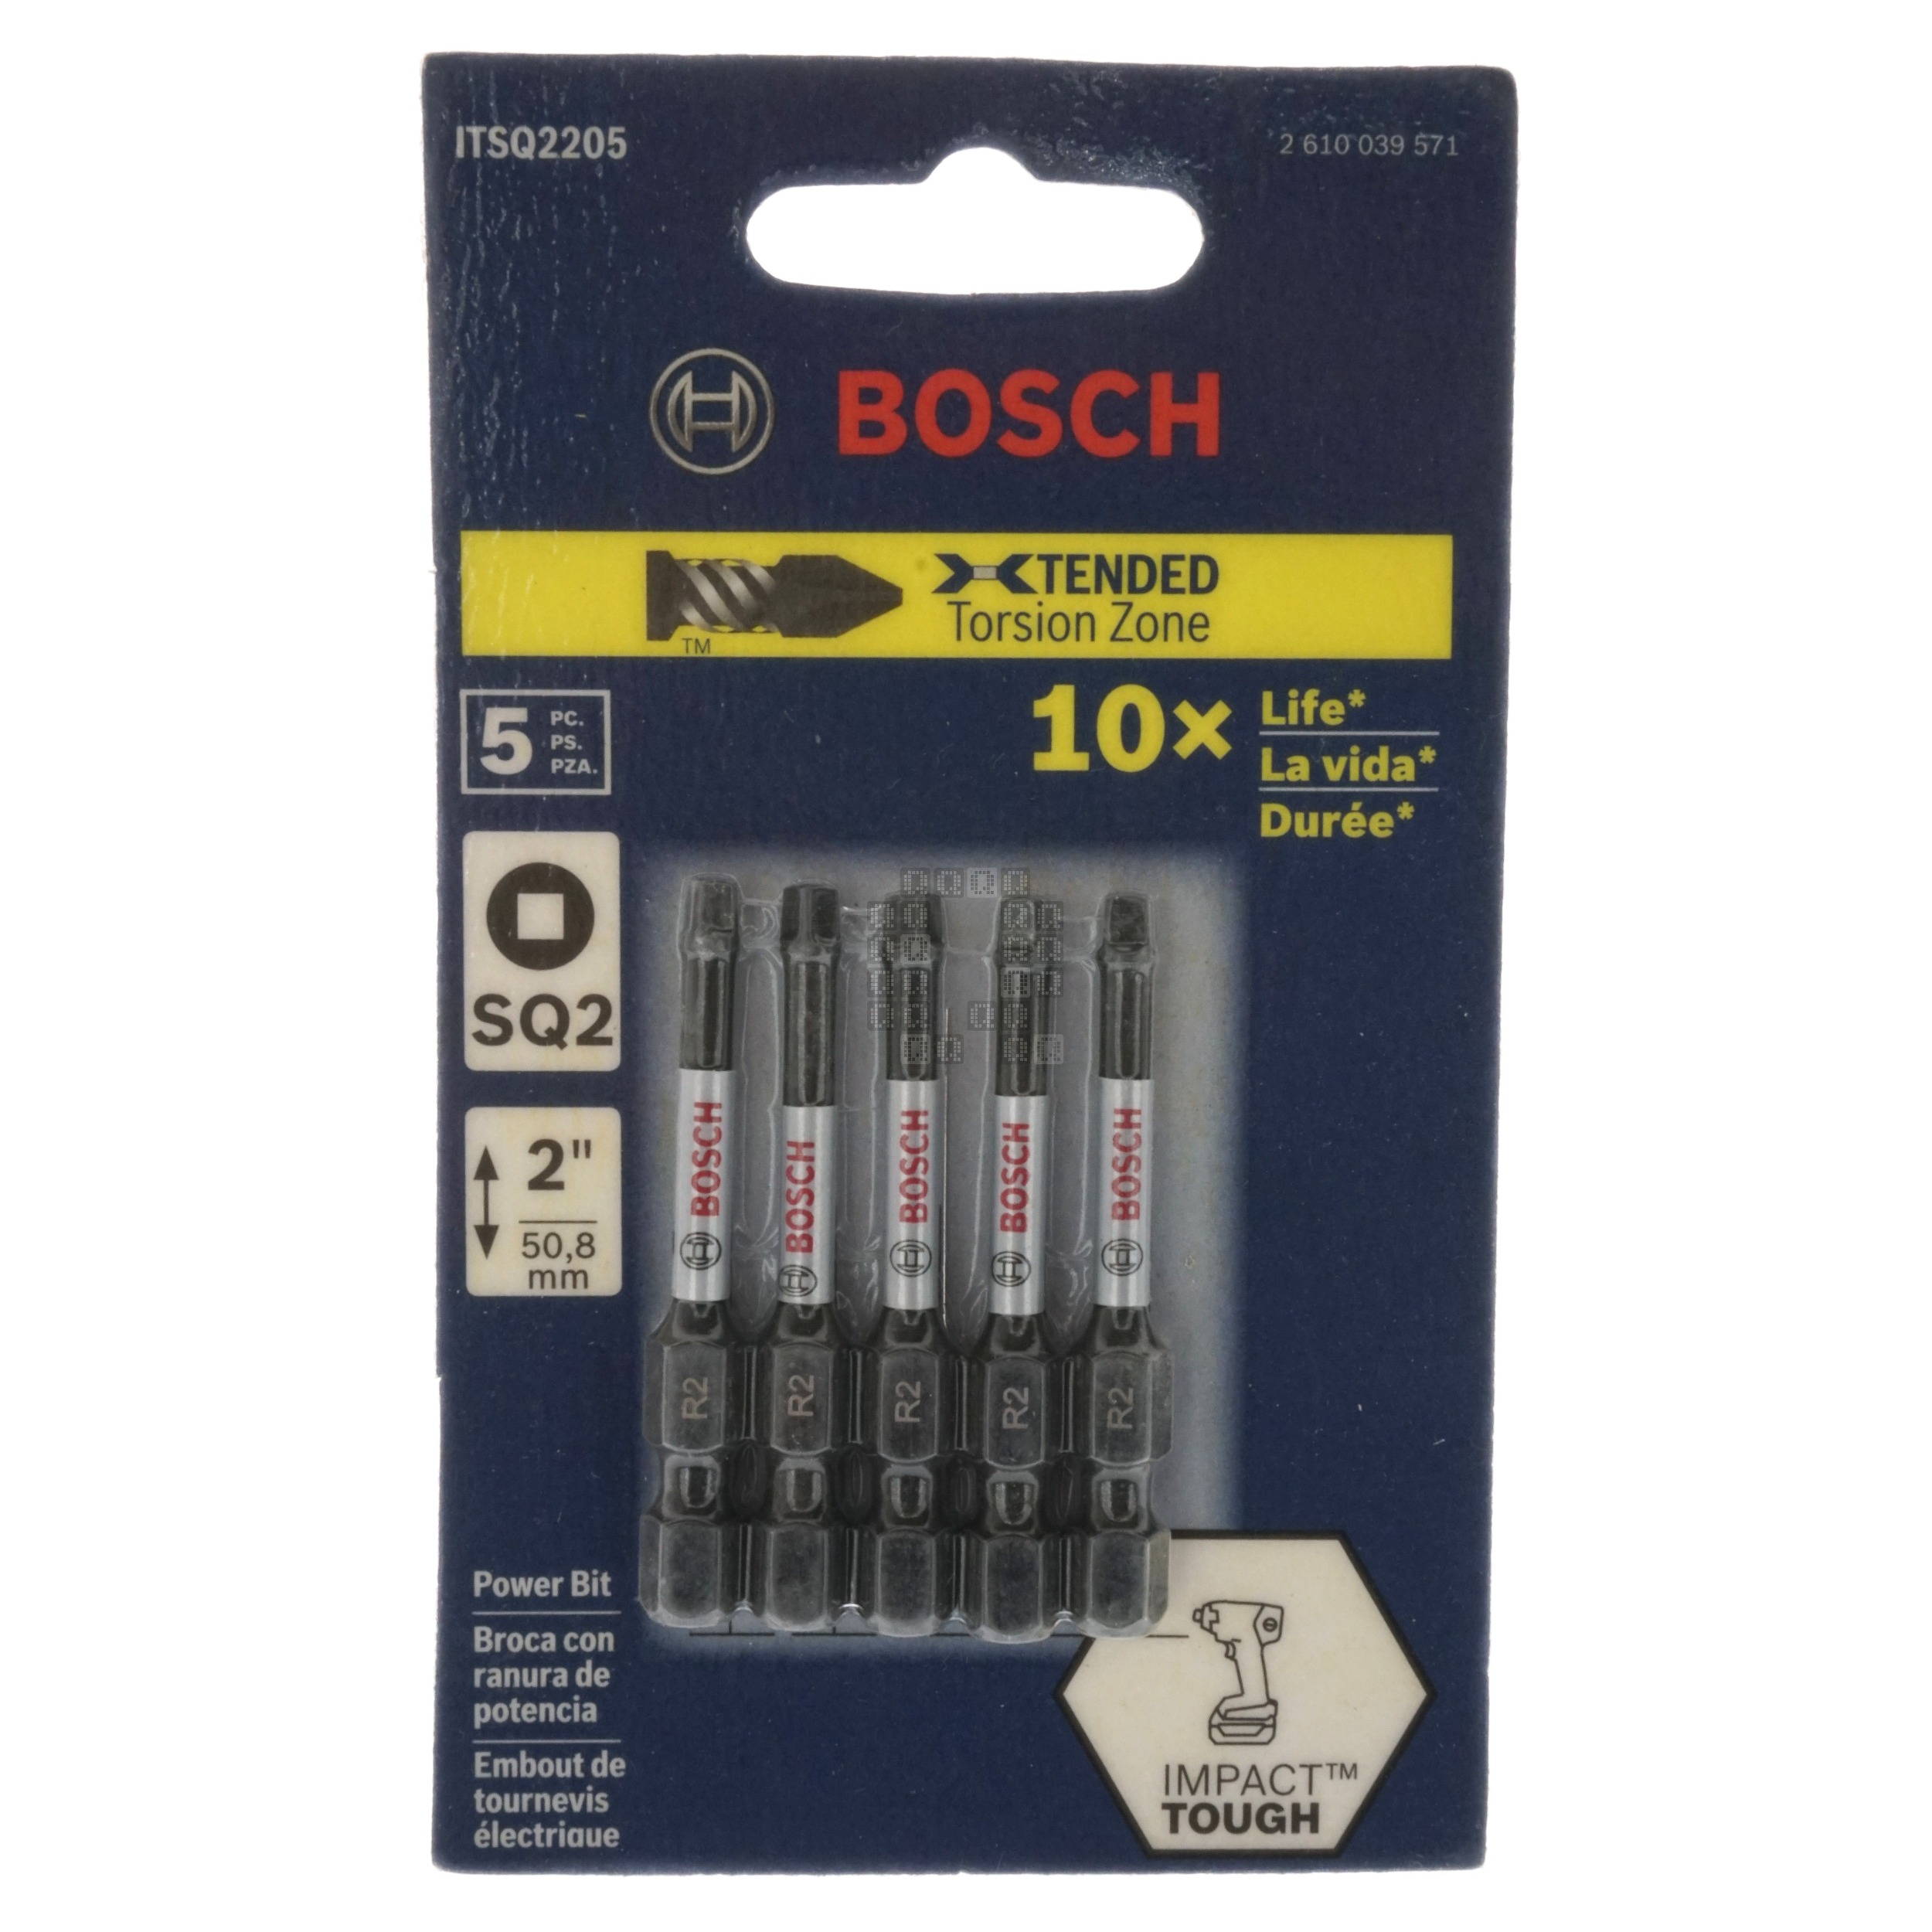 Bosch ITSQ2205 2610039571 Impact Tough SQ2 #2 Square Recess Power Bit, 2" Length, 5-Pack